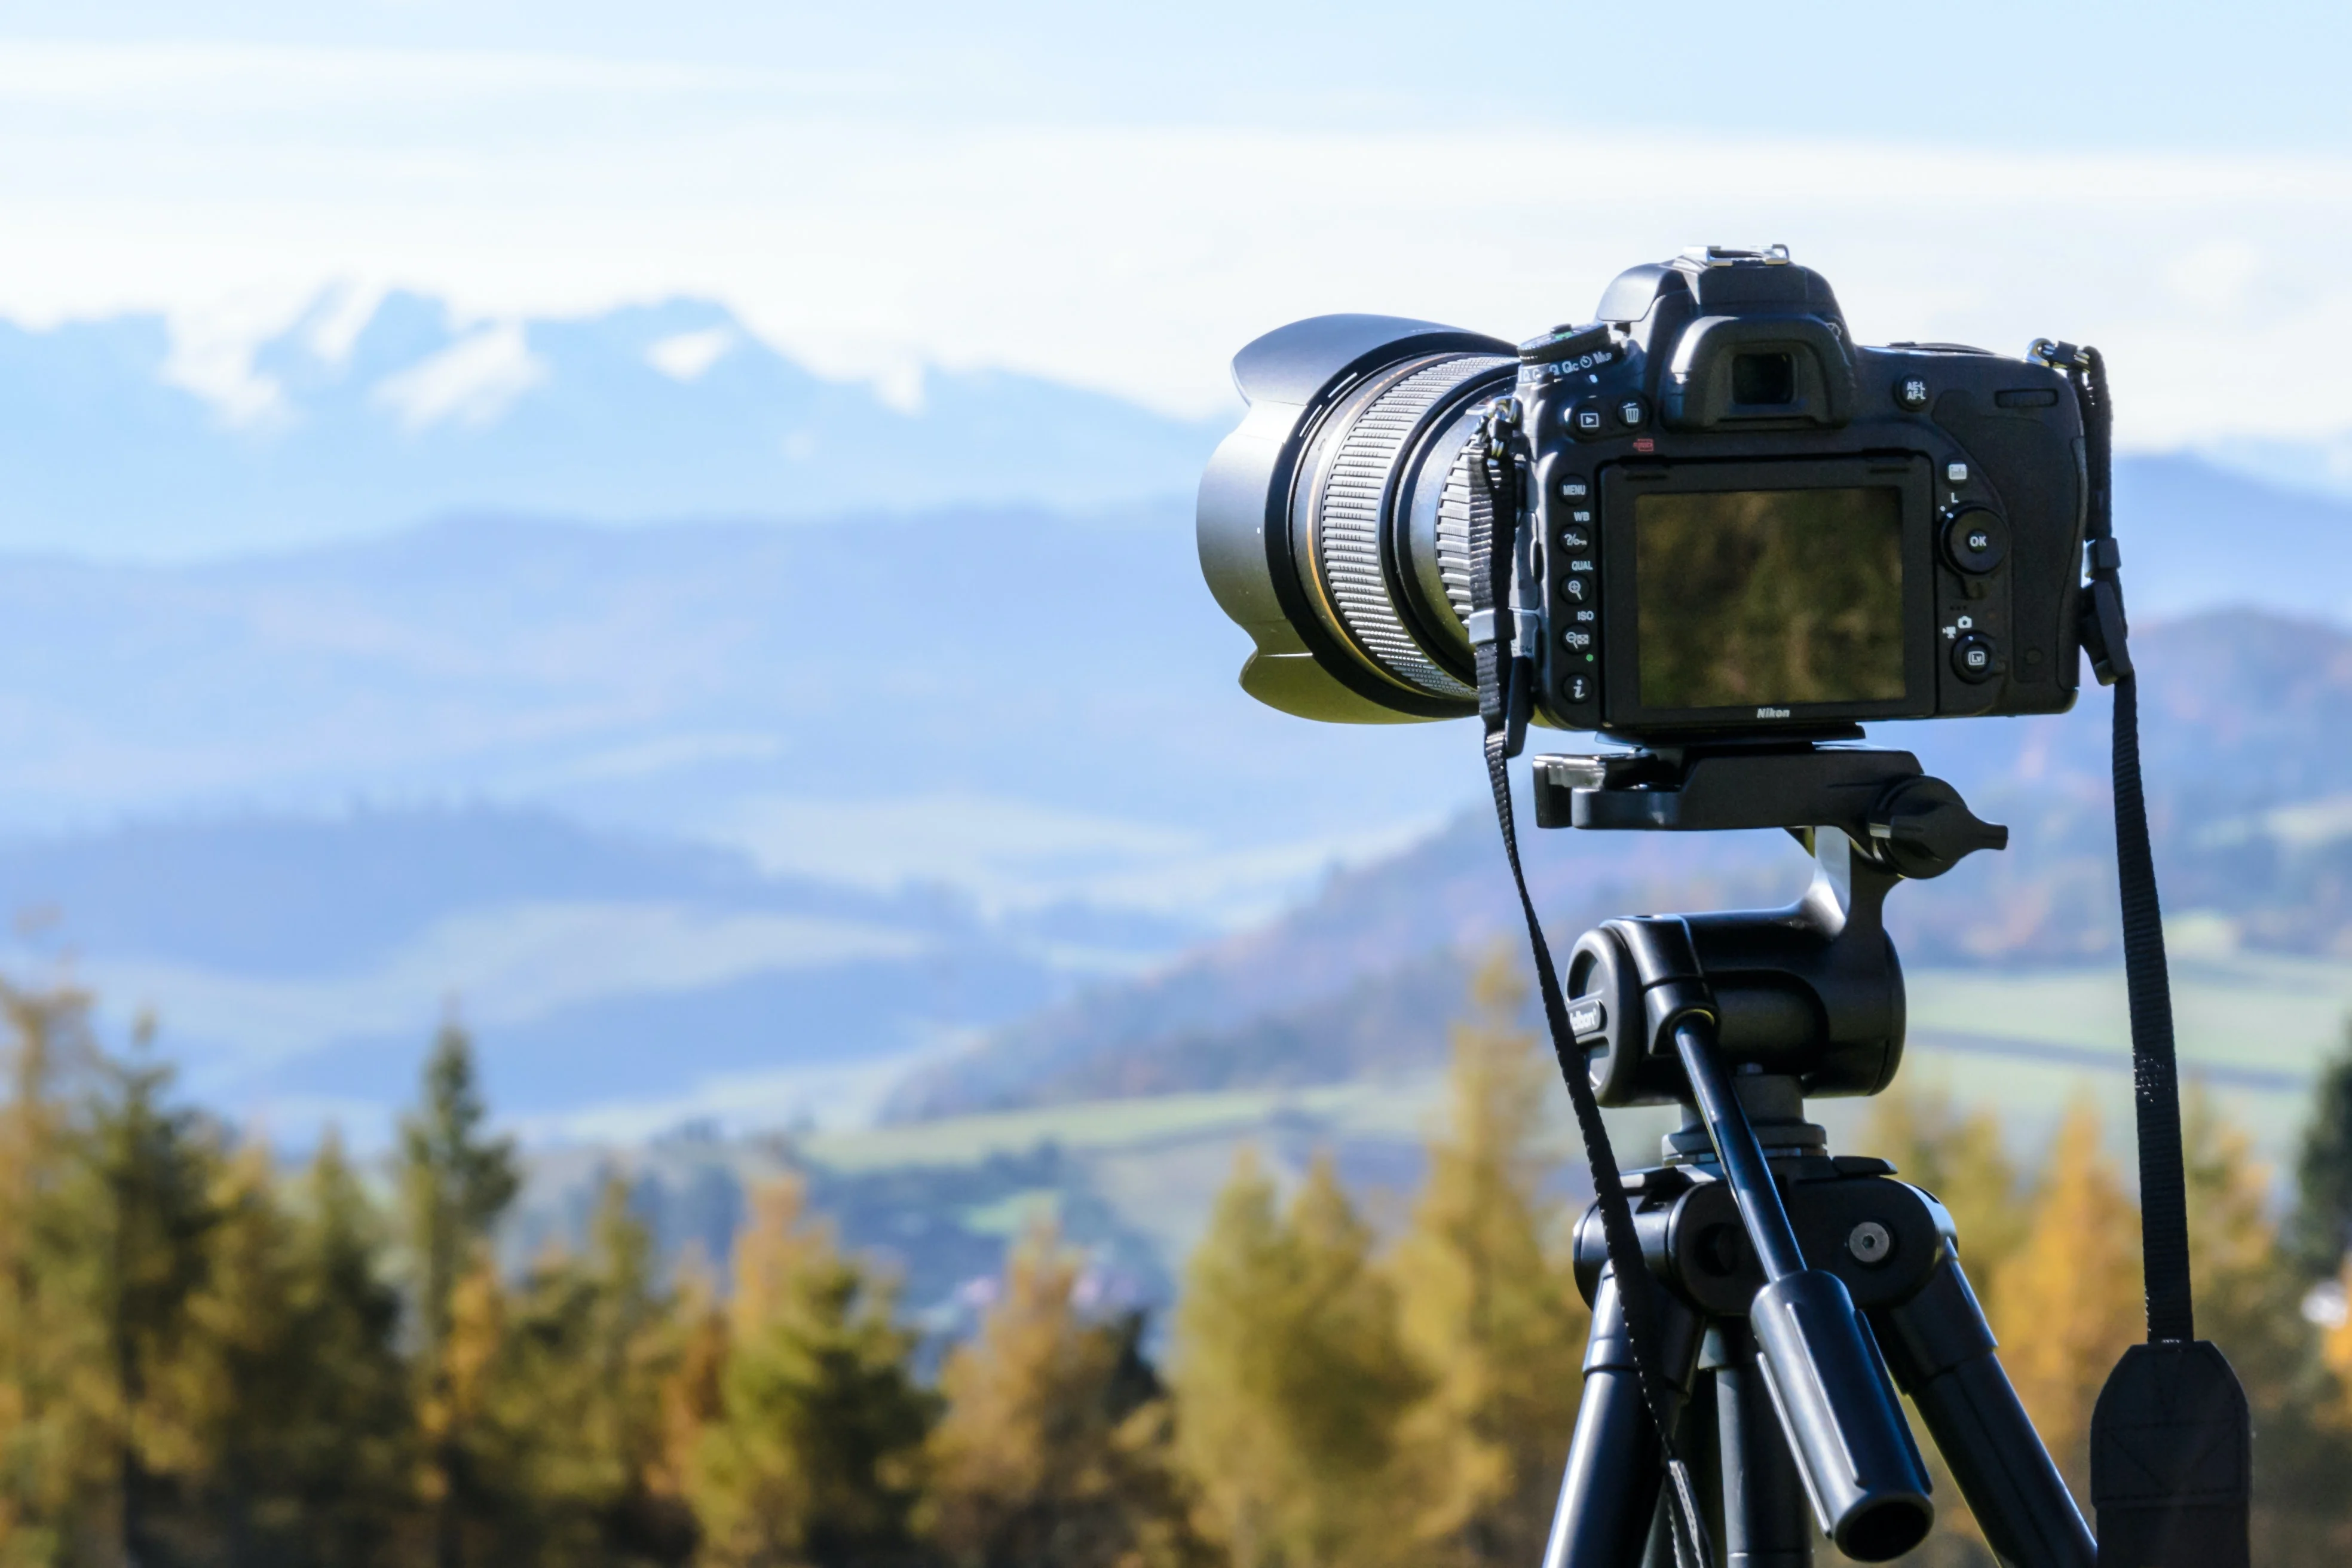 Camera sitting on a tripod, overlooking a mountain scene